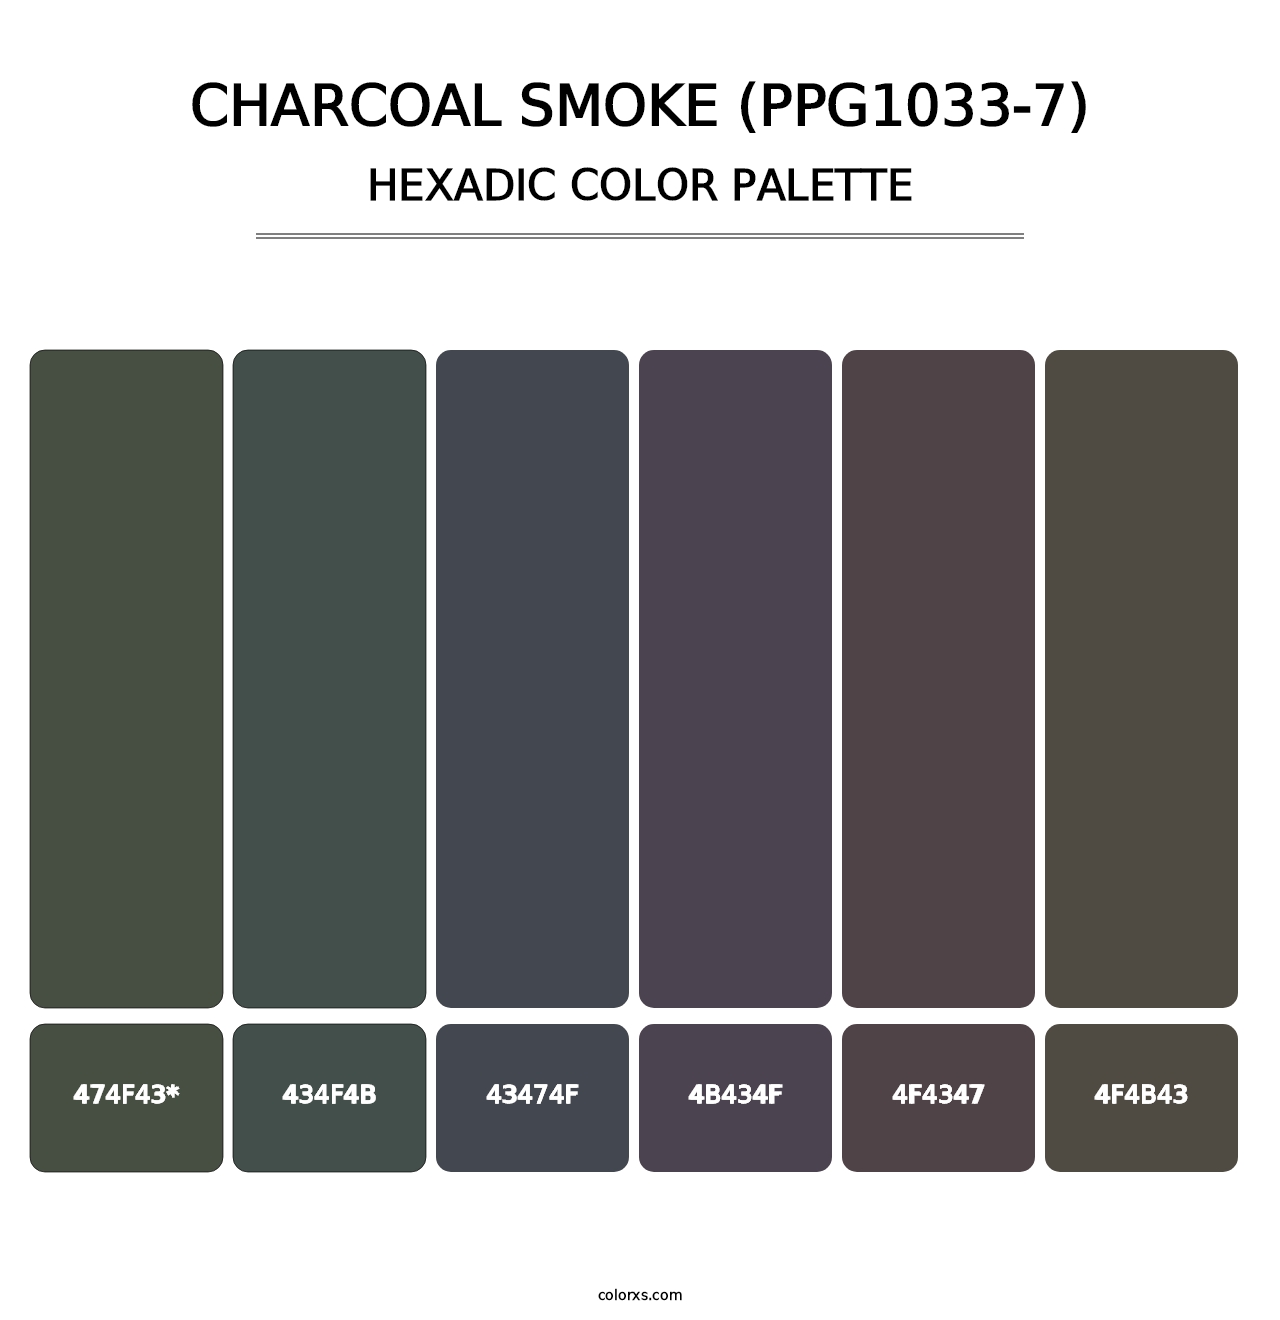 Charcoal Smoke (PPG1033-7) - Hexadic Color Palette